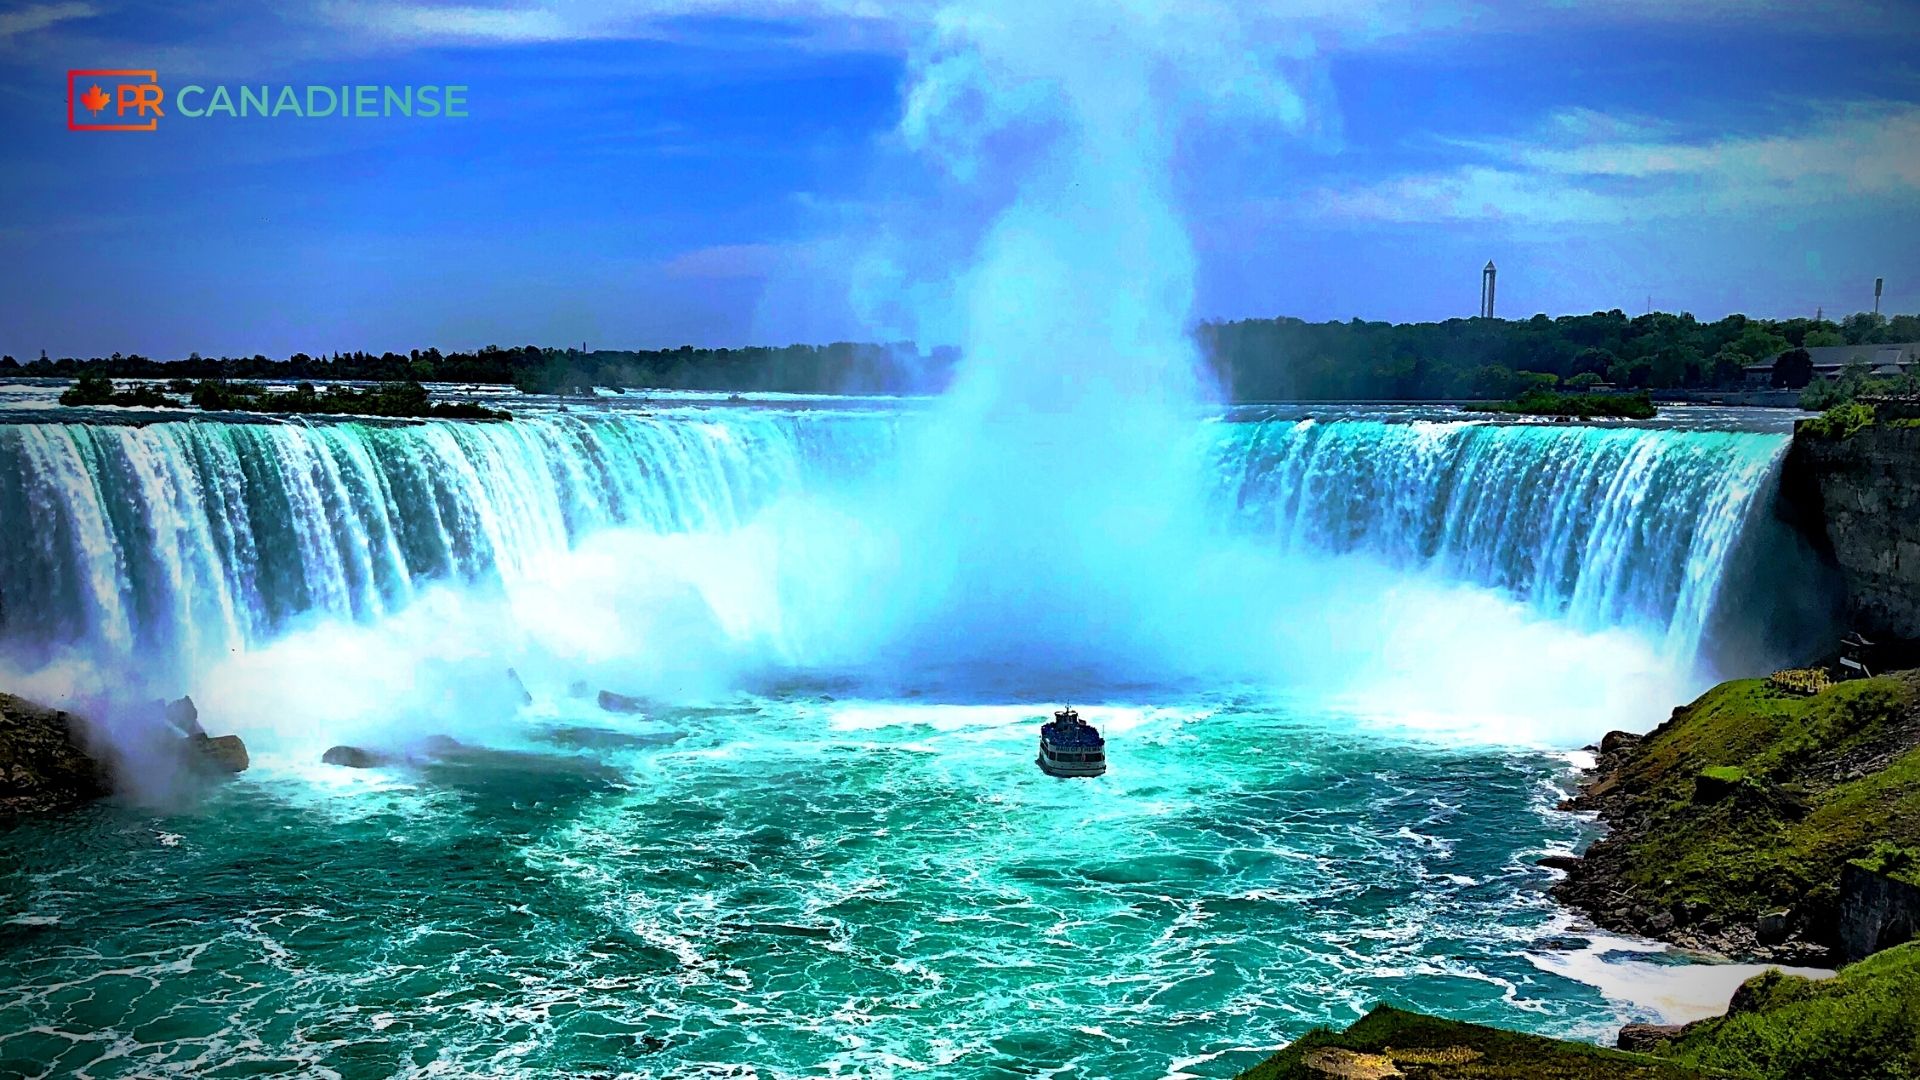 PR CANADIENSE - Niagara Falls, Canada